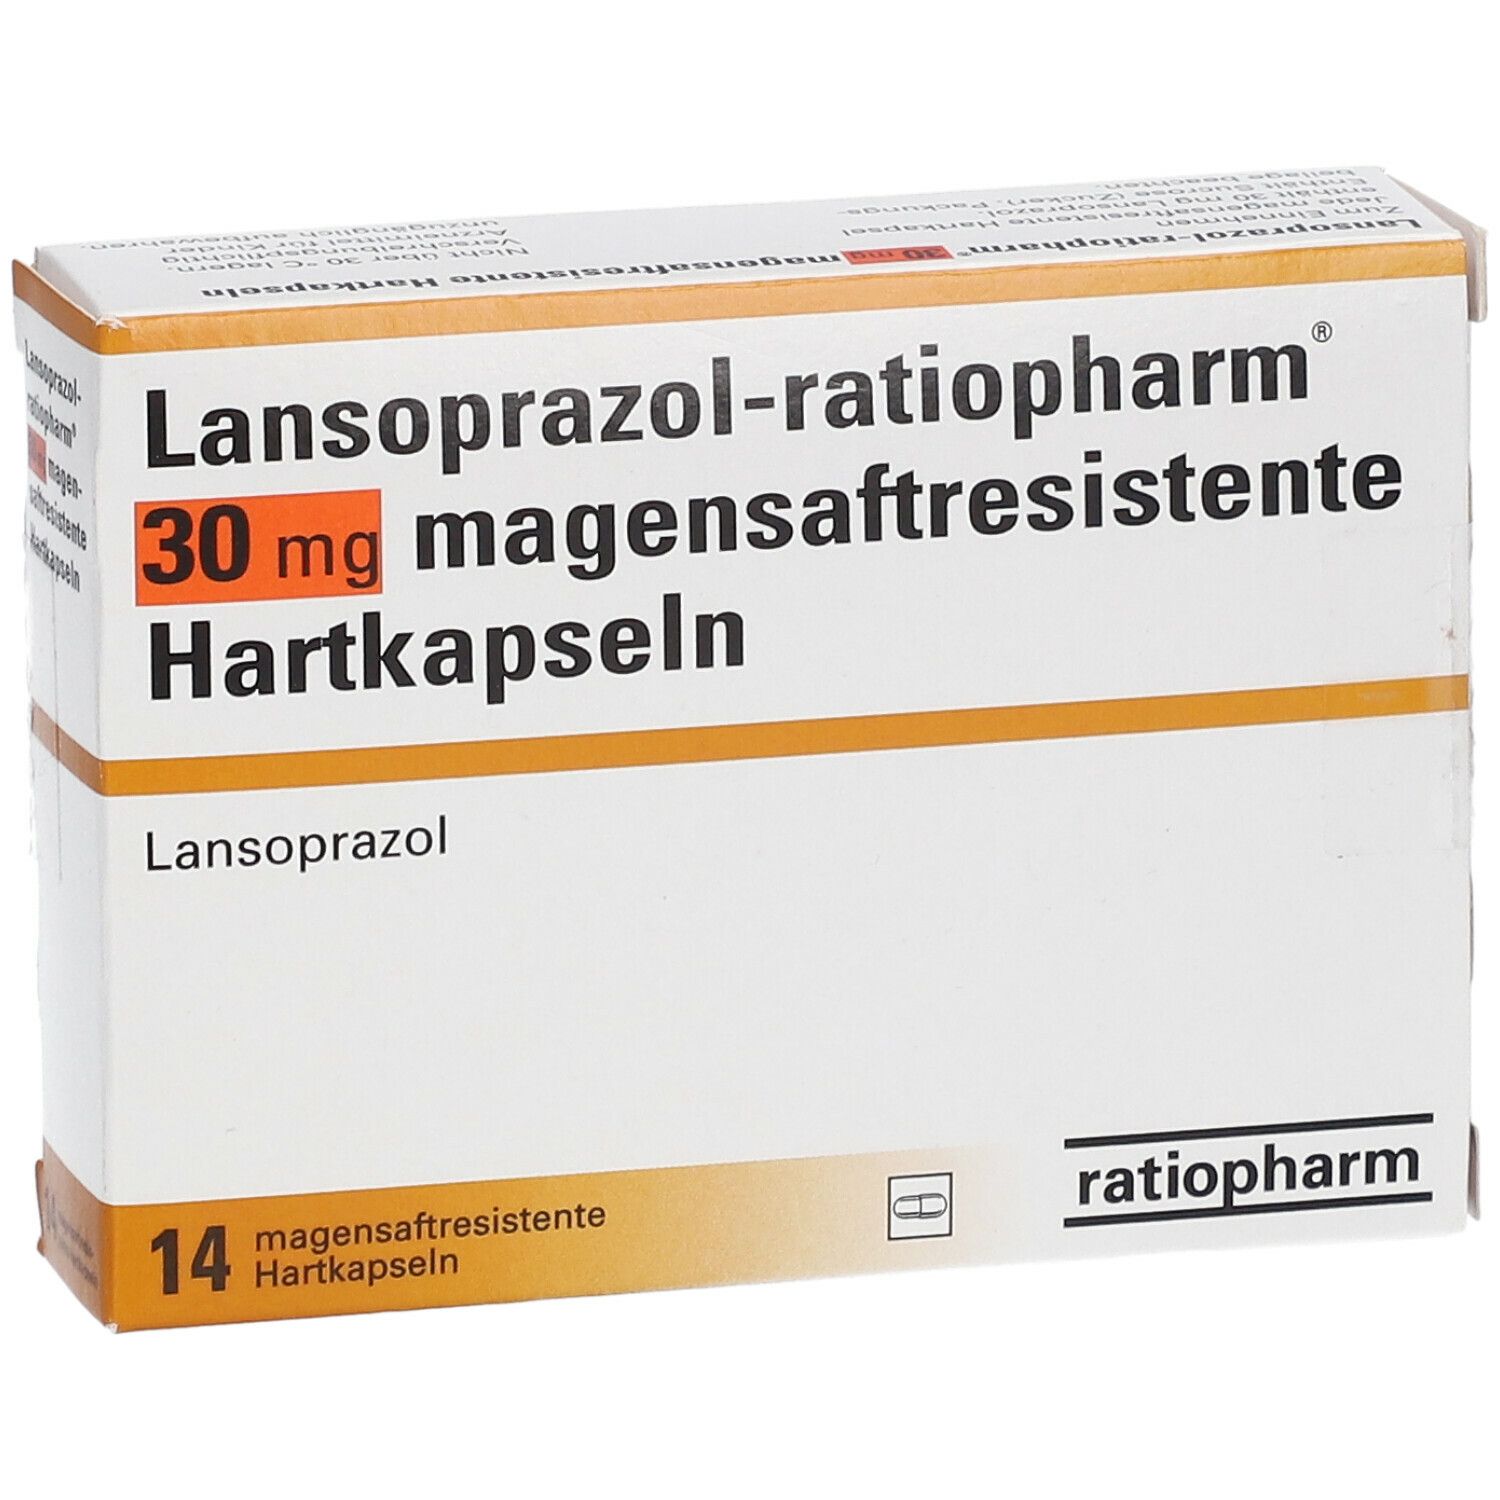 Lansoprazol-ratiopharm® 7 St - shop-apotheke.com